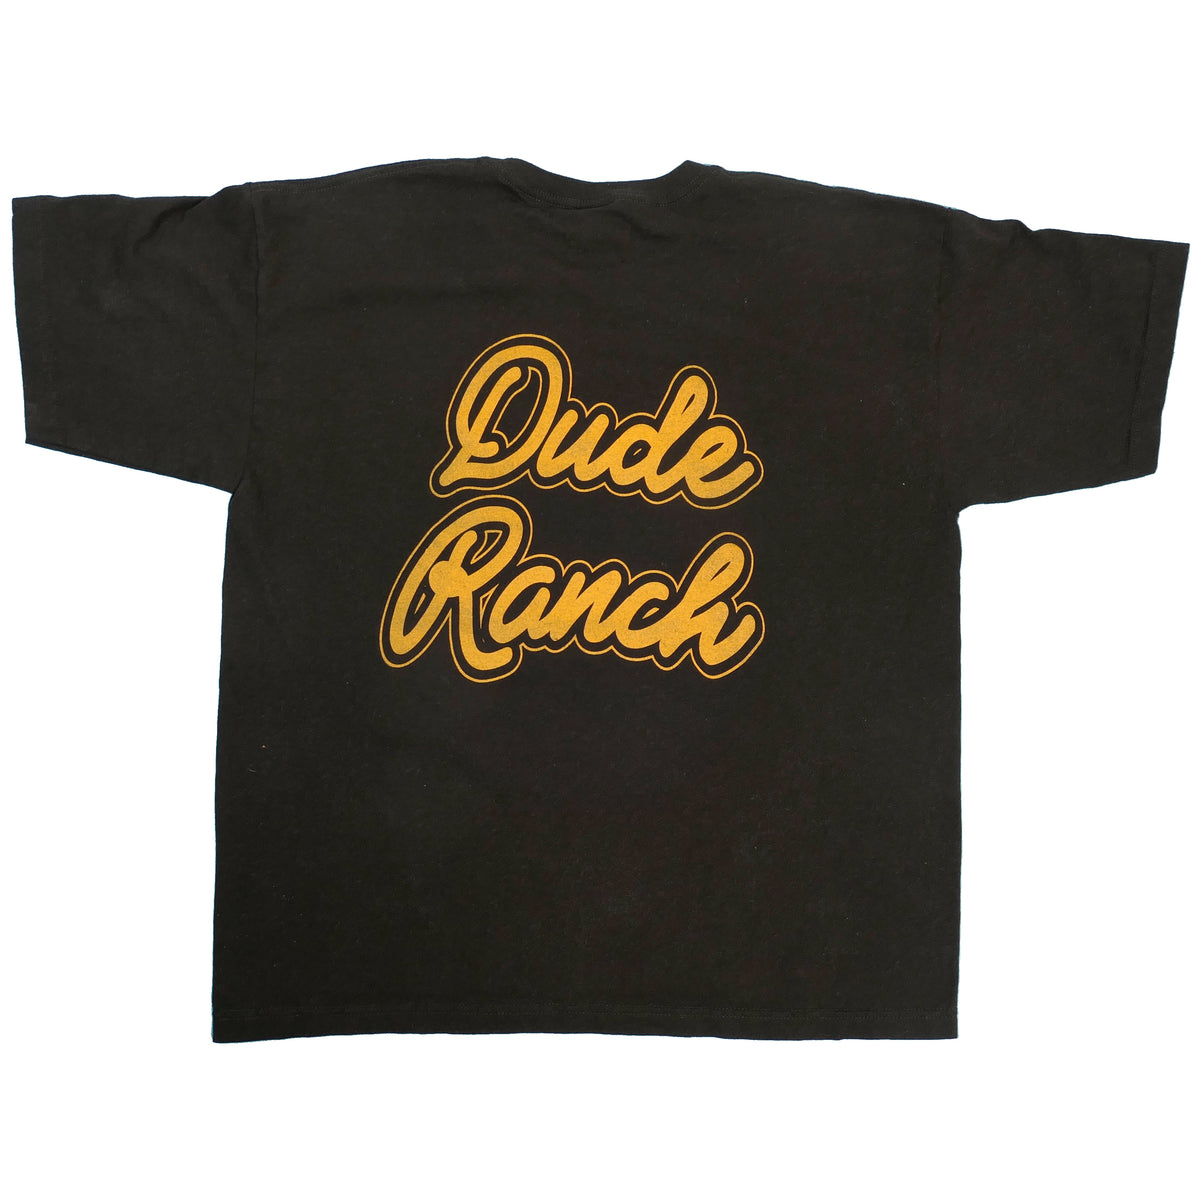 Blink 182 Dude Ranch Tee